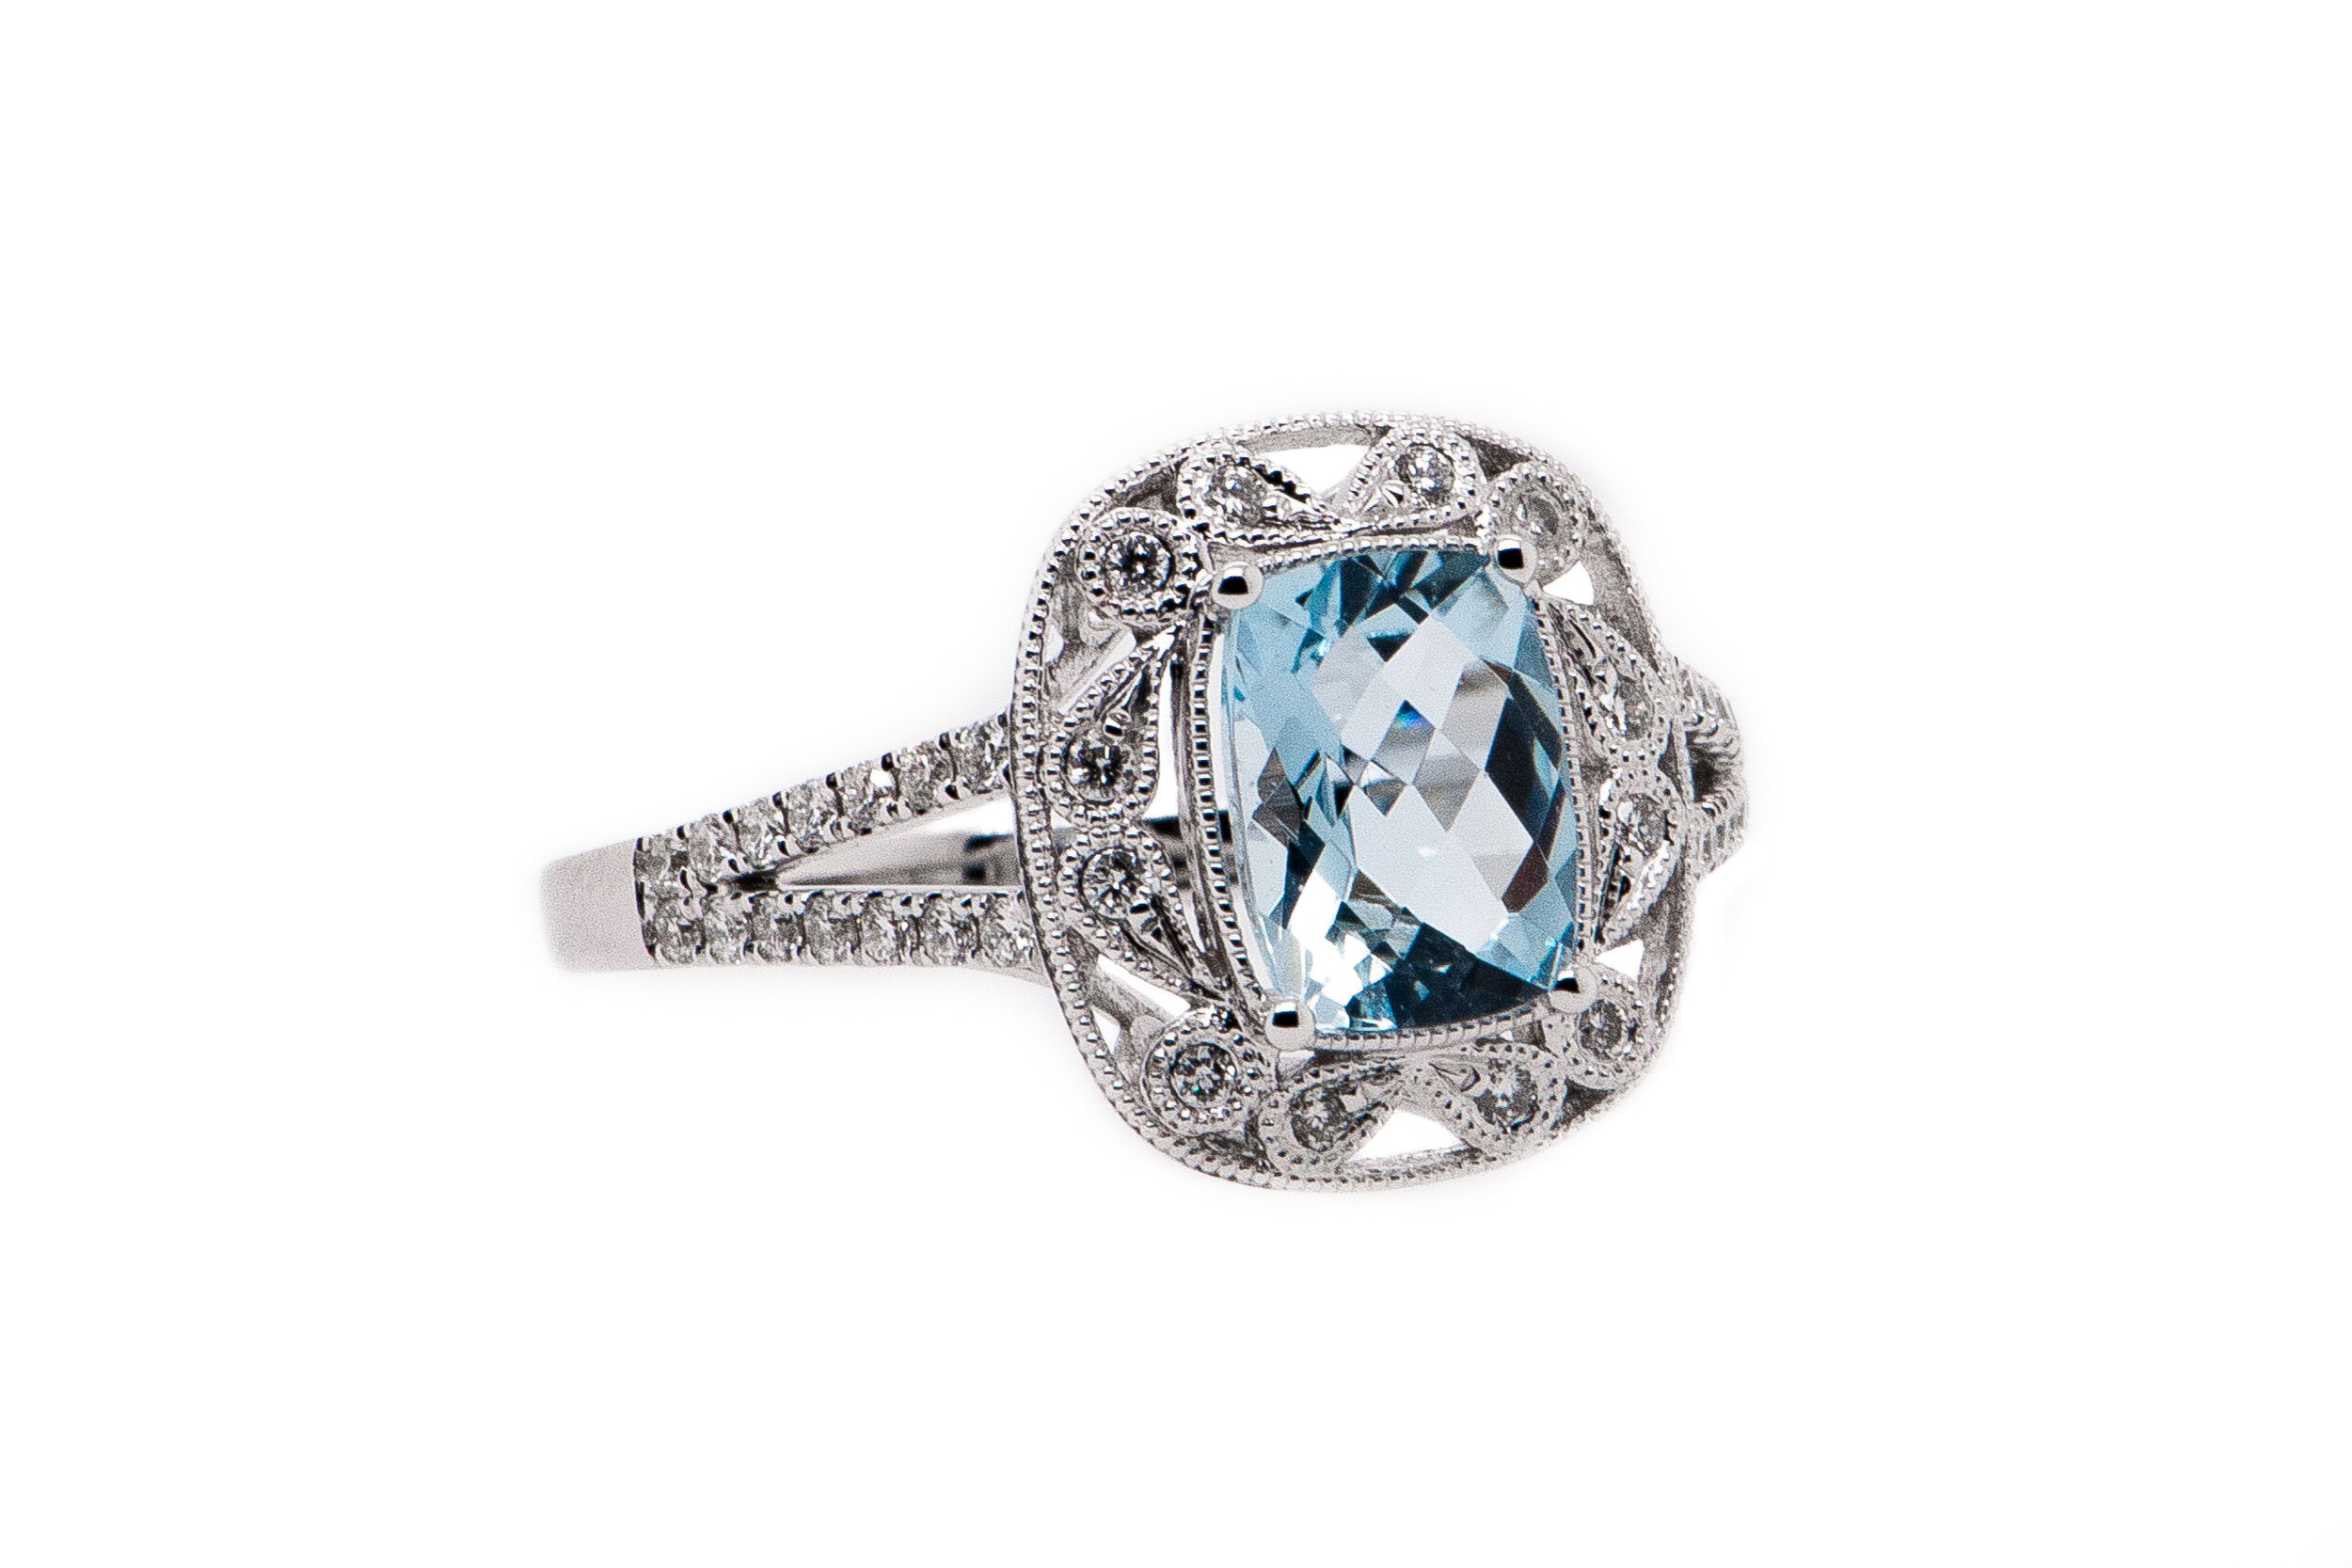 Aqua and Diamond Antique Style Ring